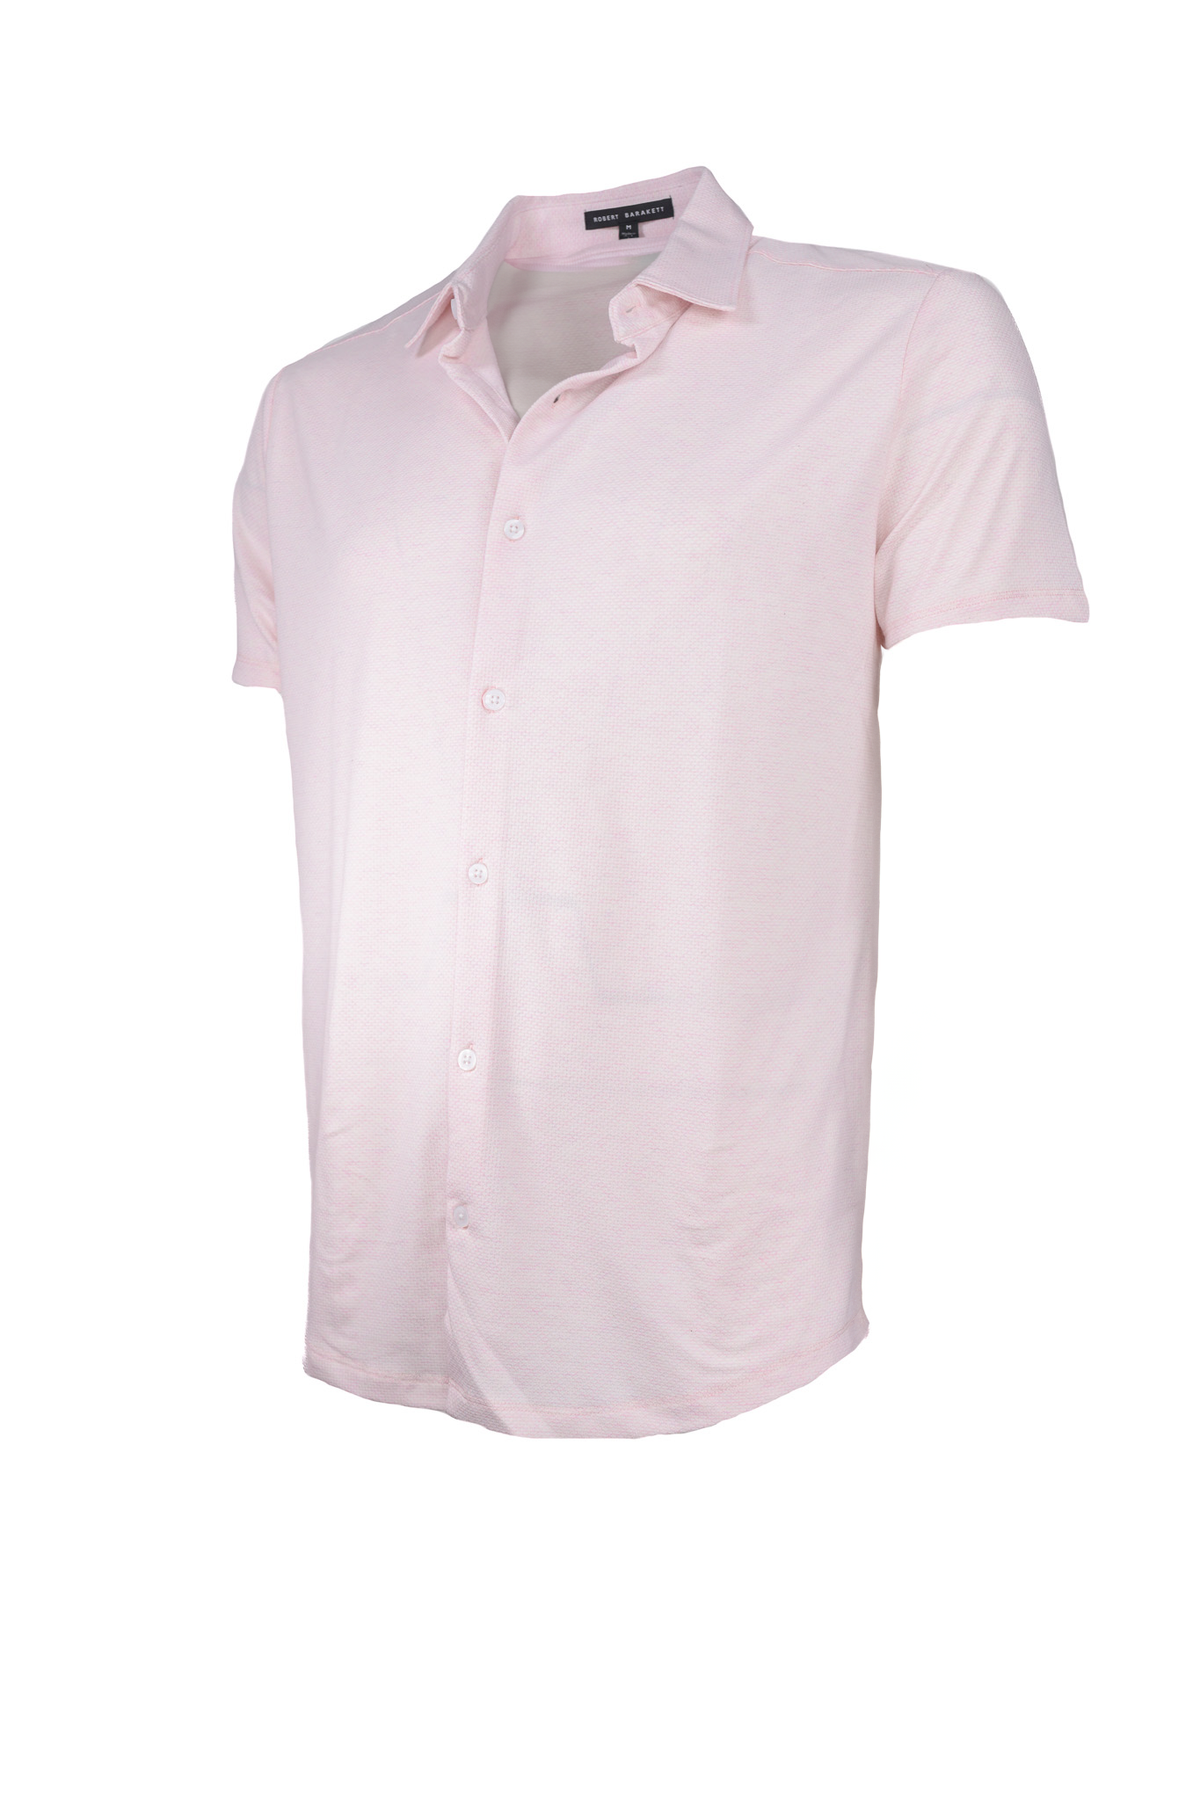 Robert Barakett Knit Keyes Shirt Pink